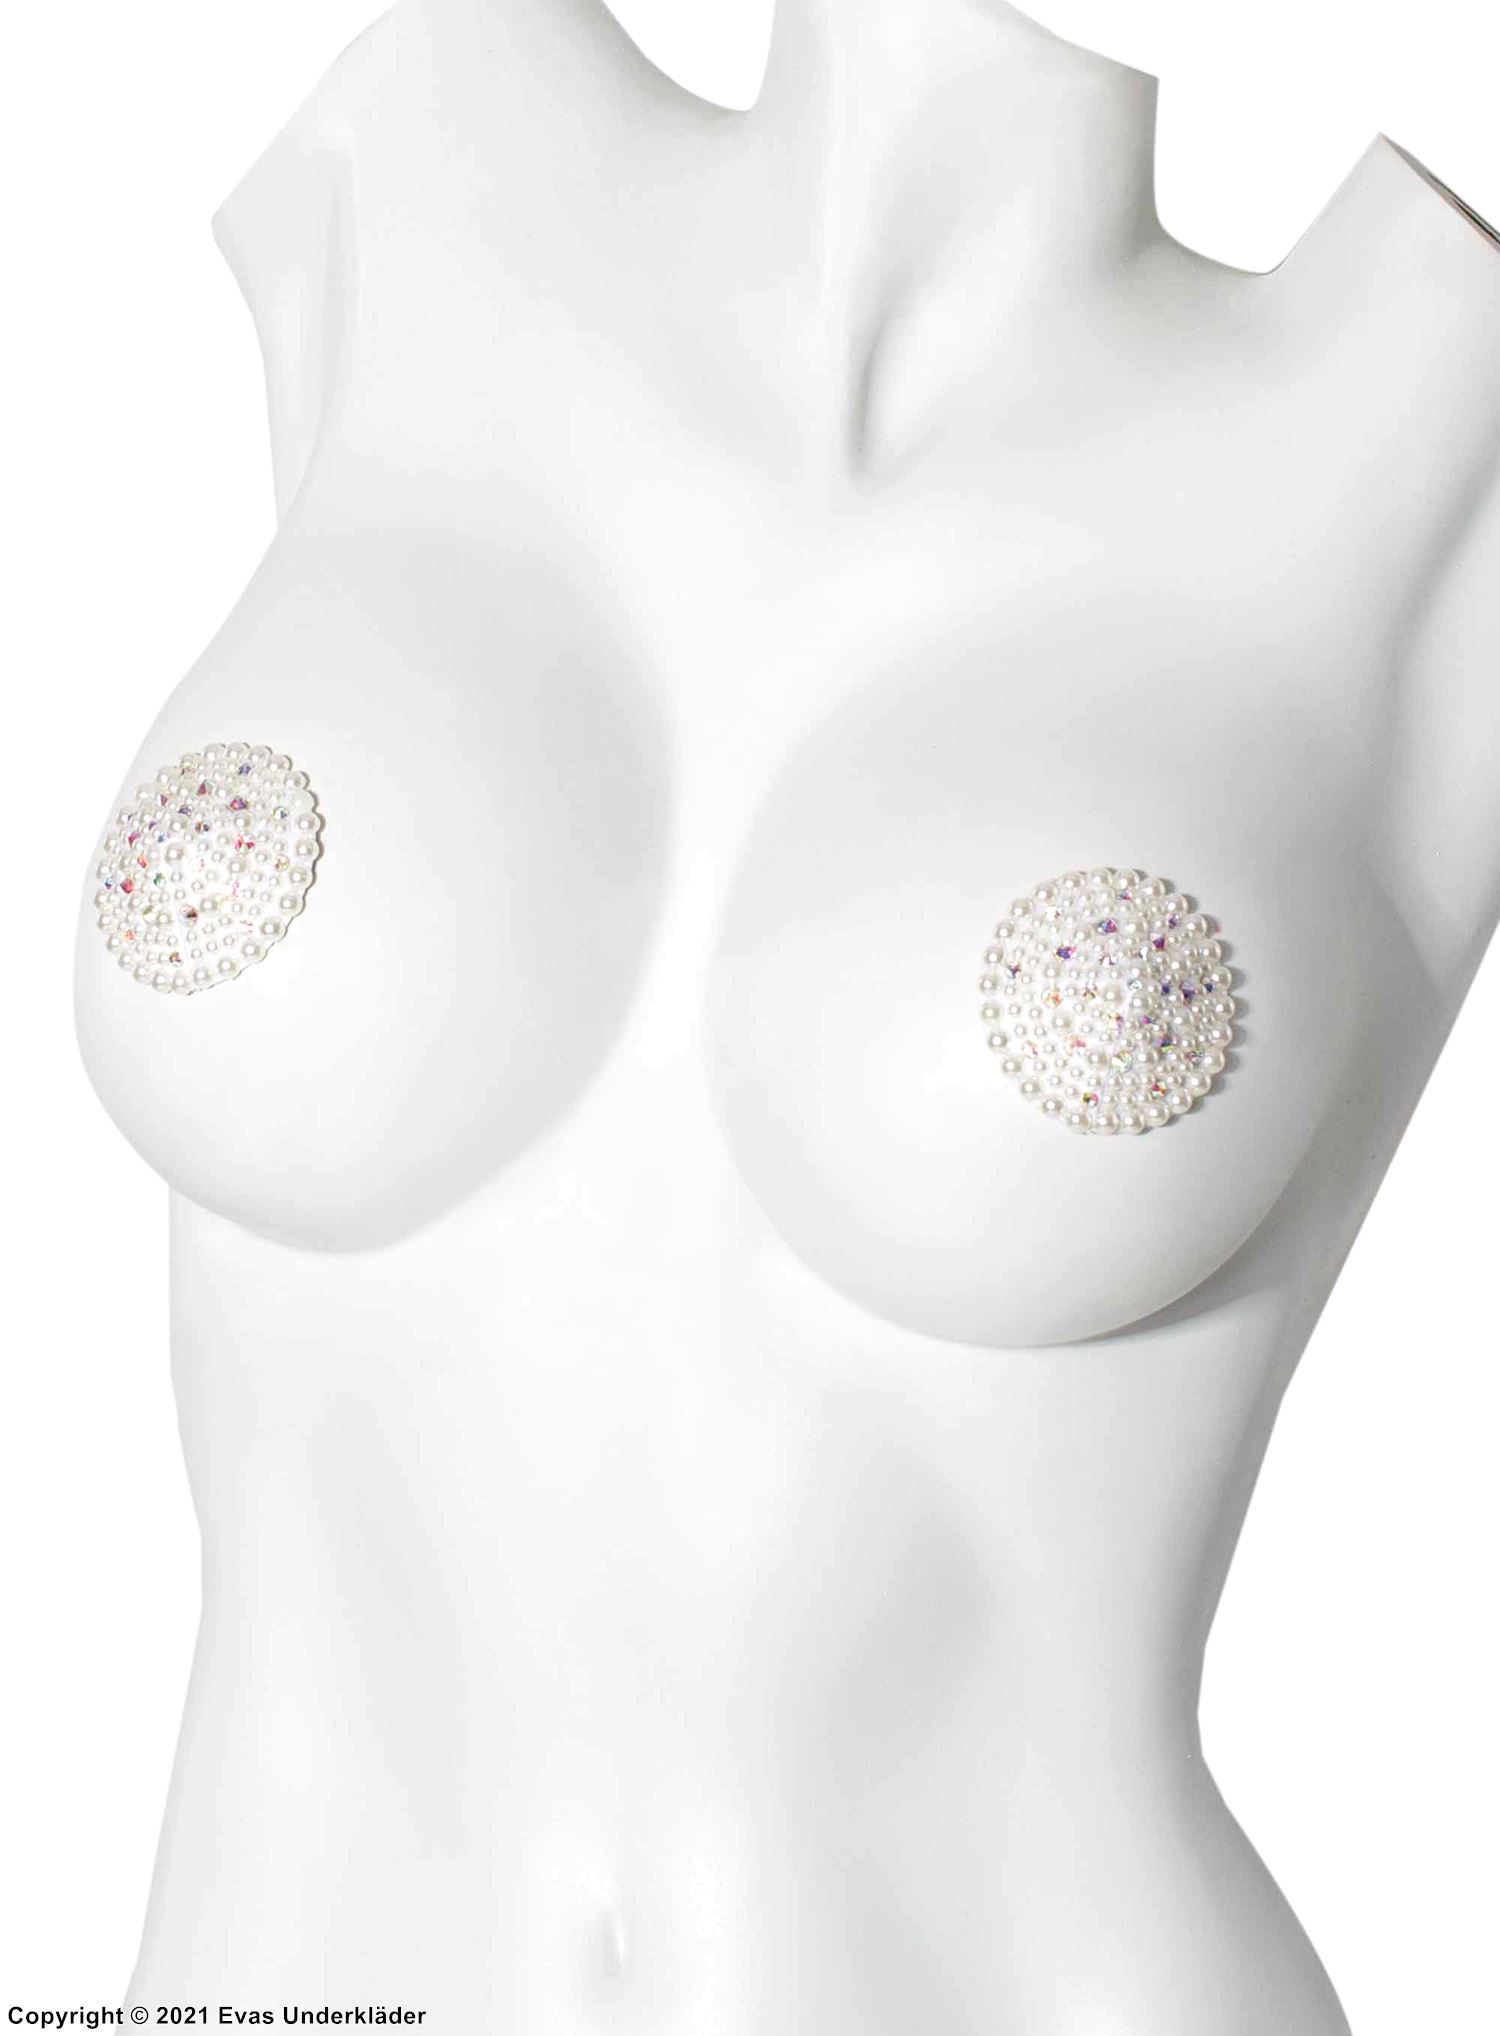 Selvklebende brystvorteskjulere, perler